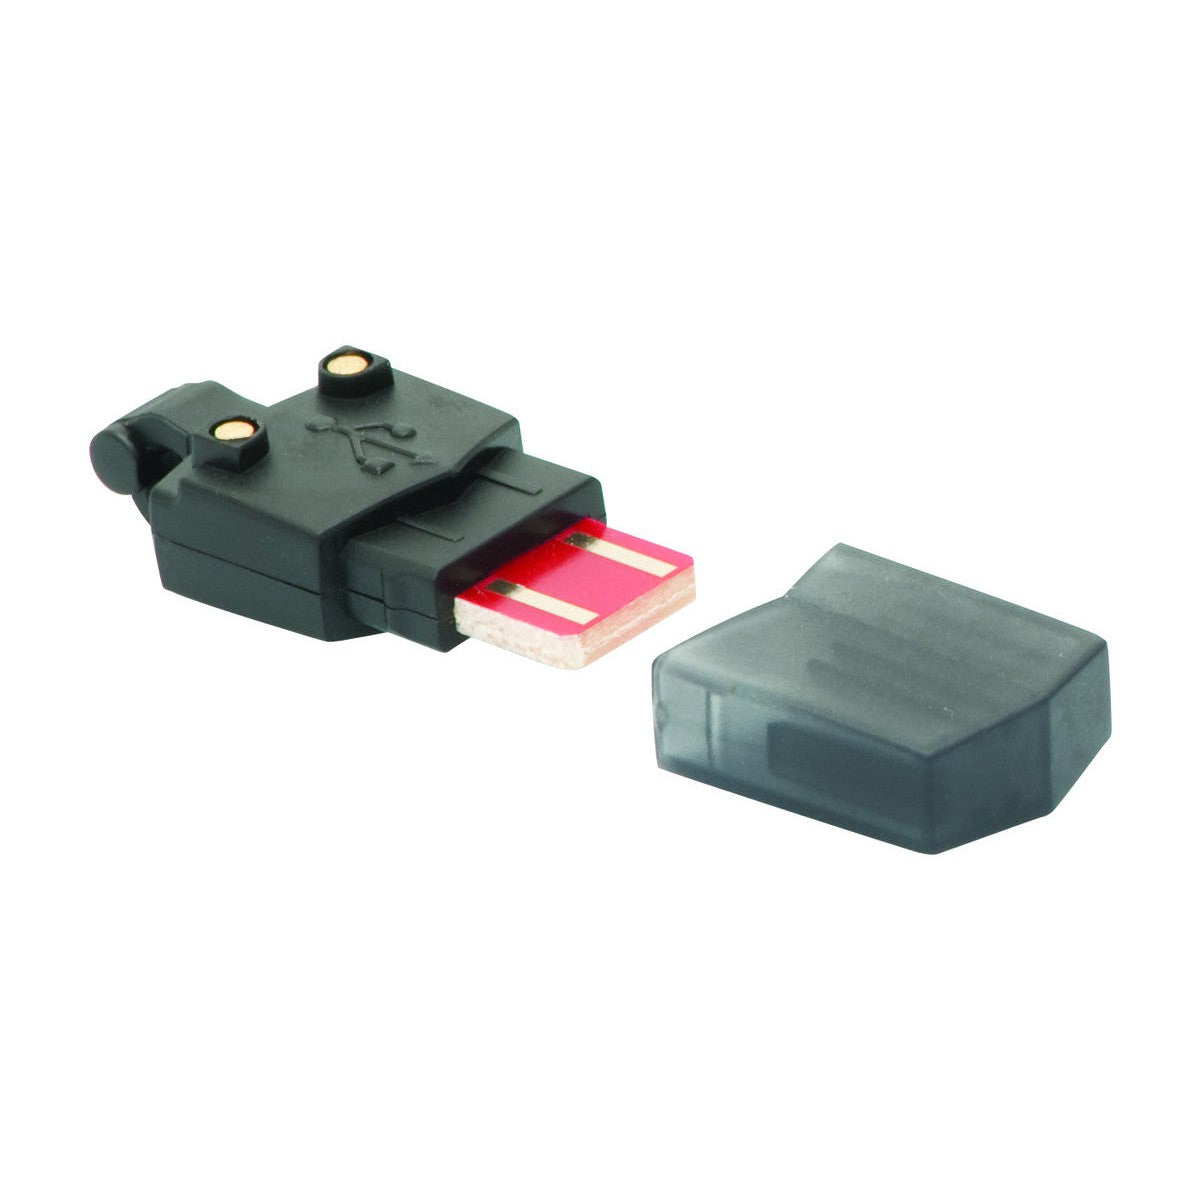 Blackburn Genuine Replacement Parts-Flea USB Charger